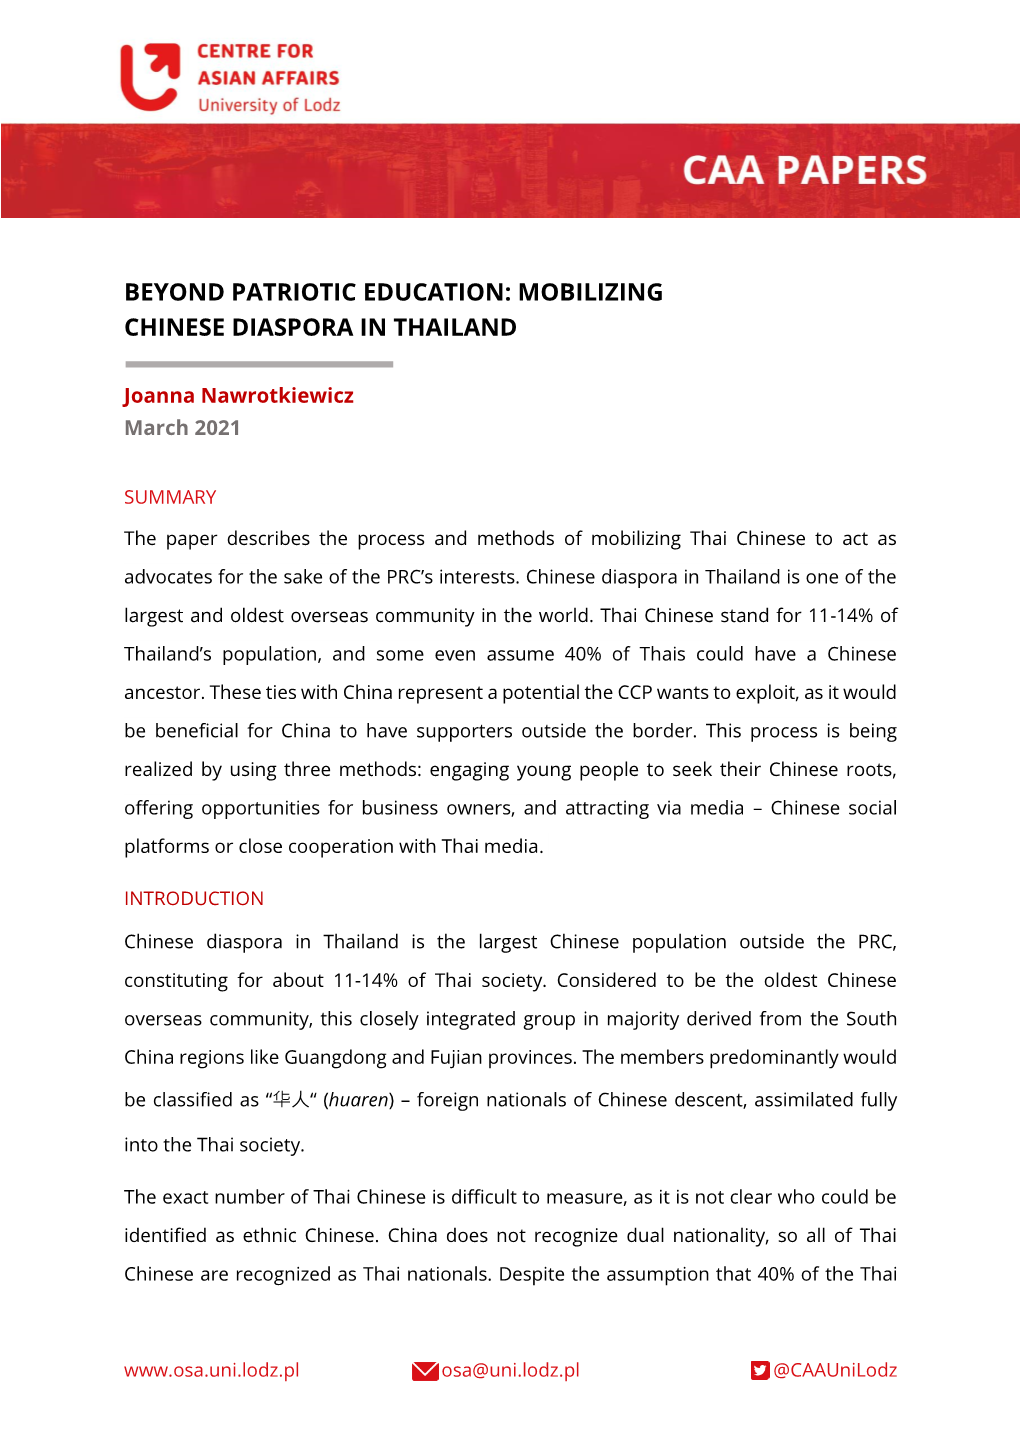 Beyond Patriotic Education: Mobilizing Chinese Diaspora in Thailand